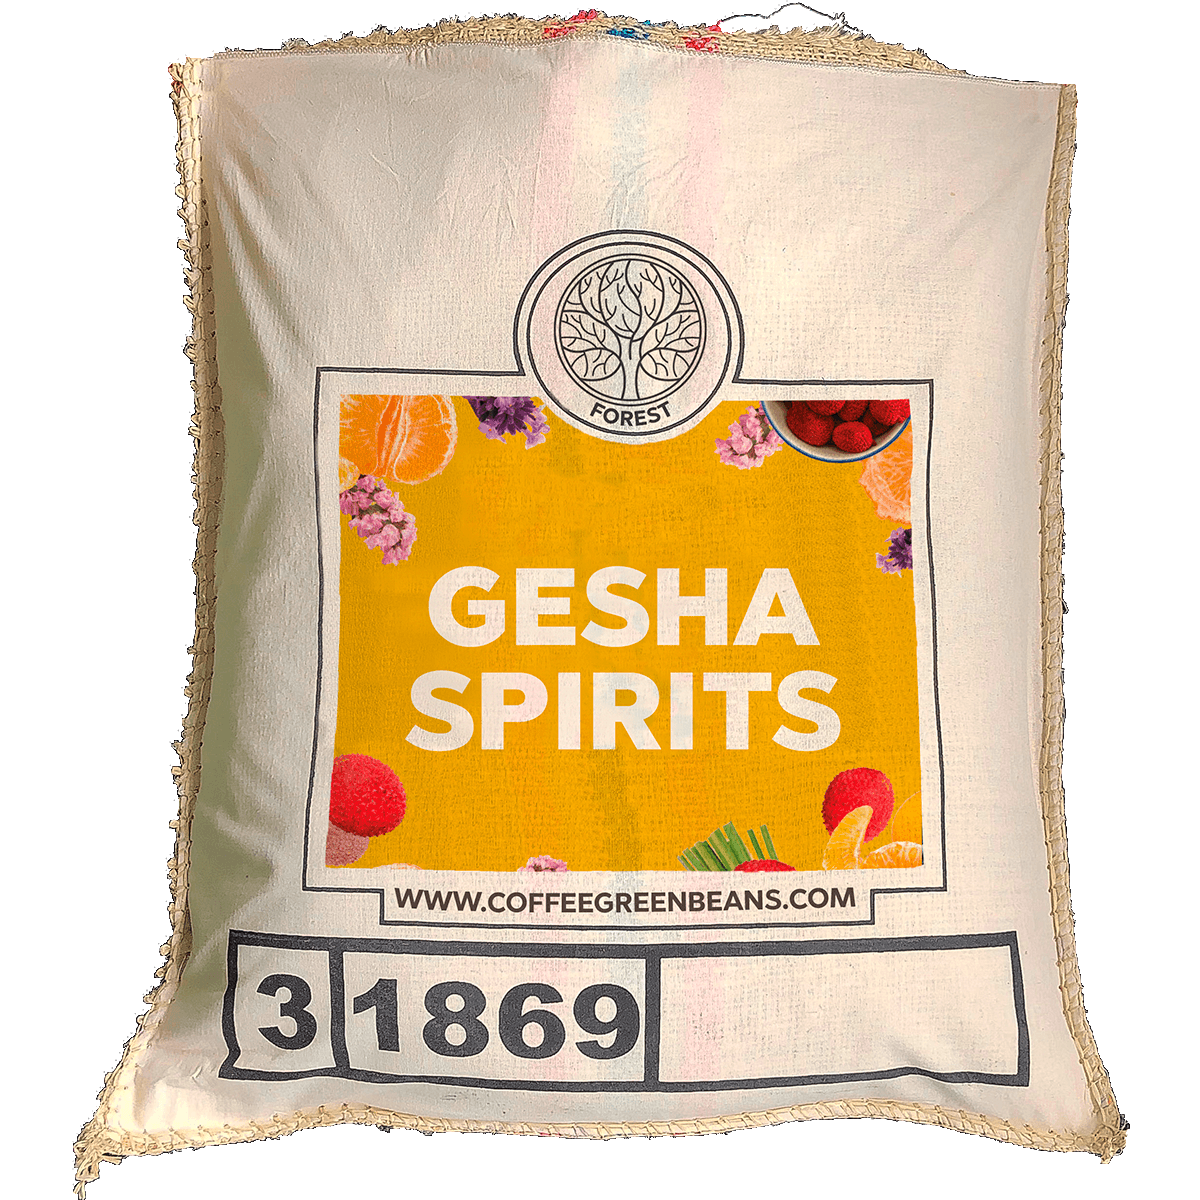 GESHA SPIRITS - Forest Coffee 